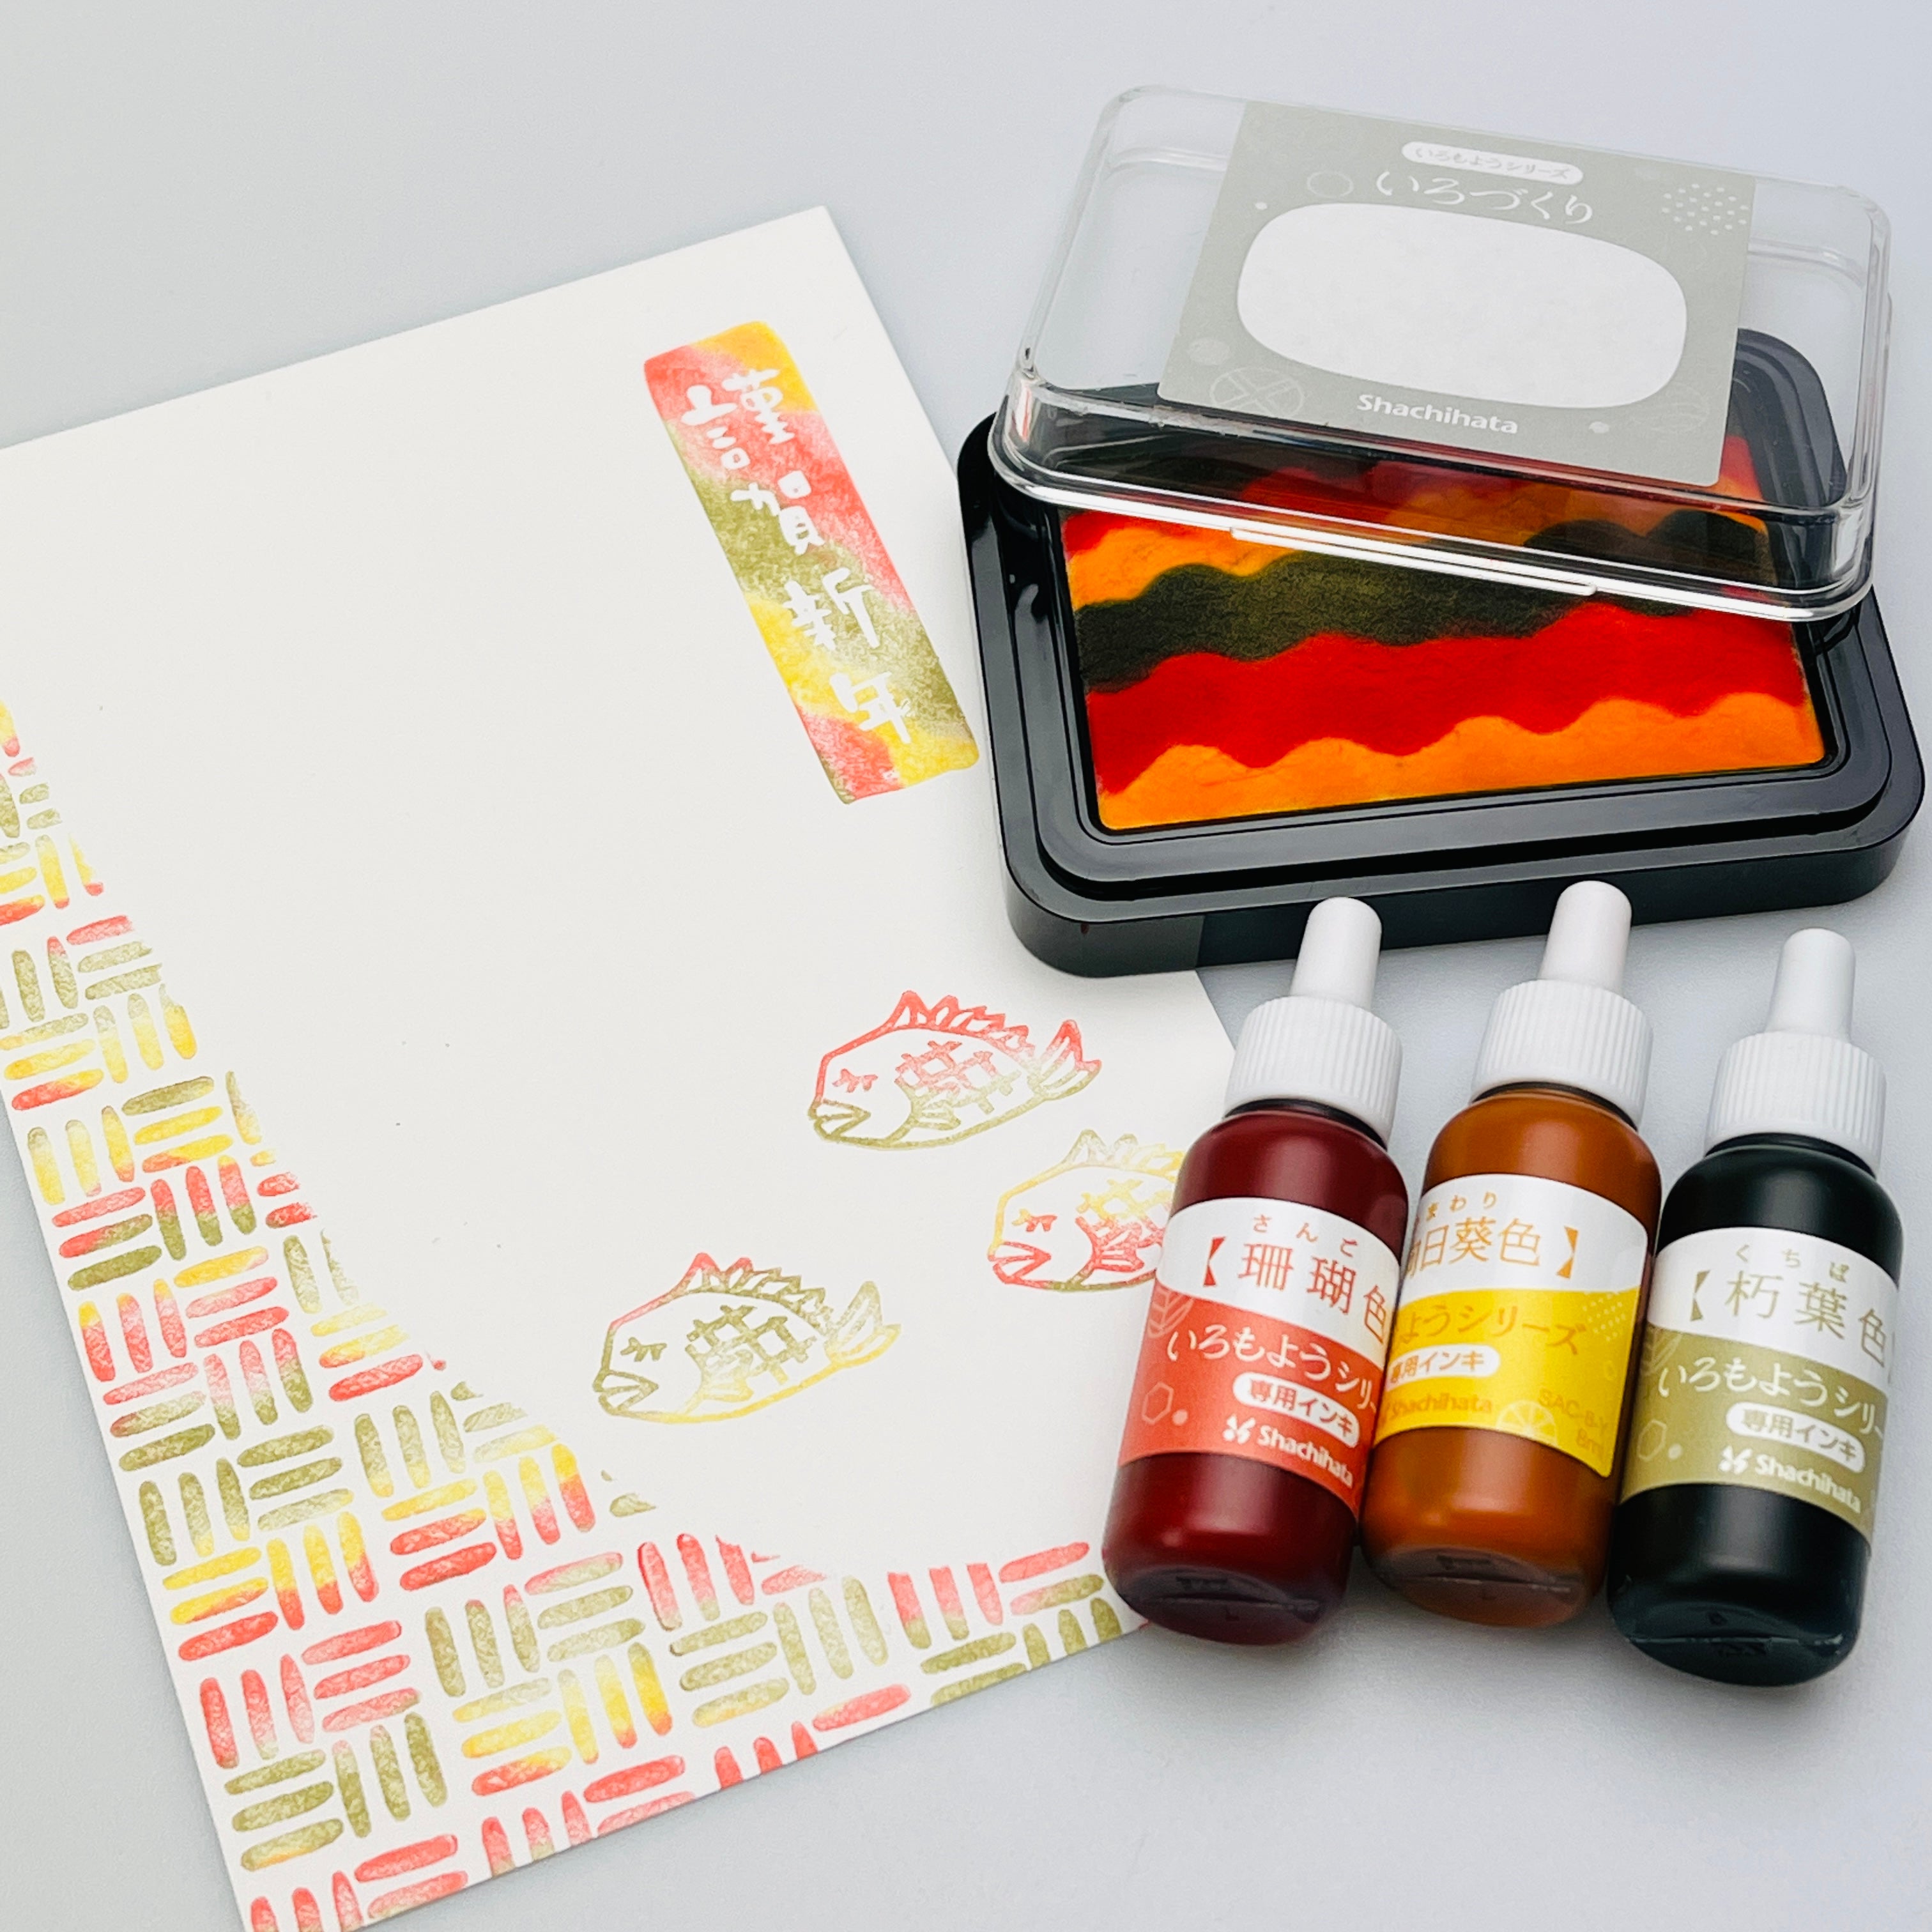 Rira Select (New Year Set) Shachihata Color Maker + 3 Colors Ink*